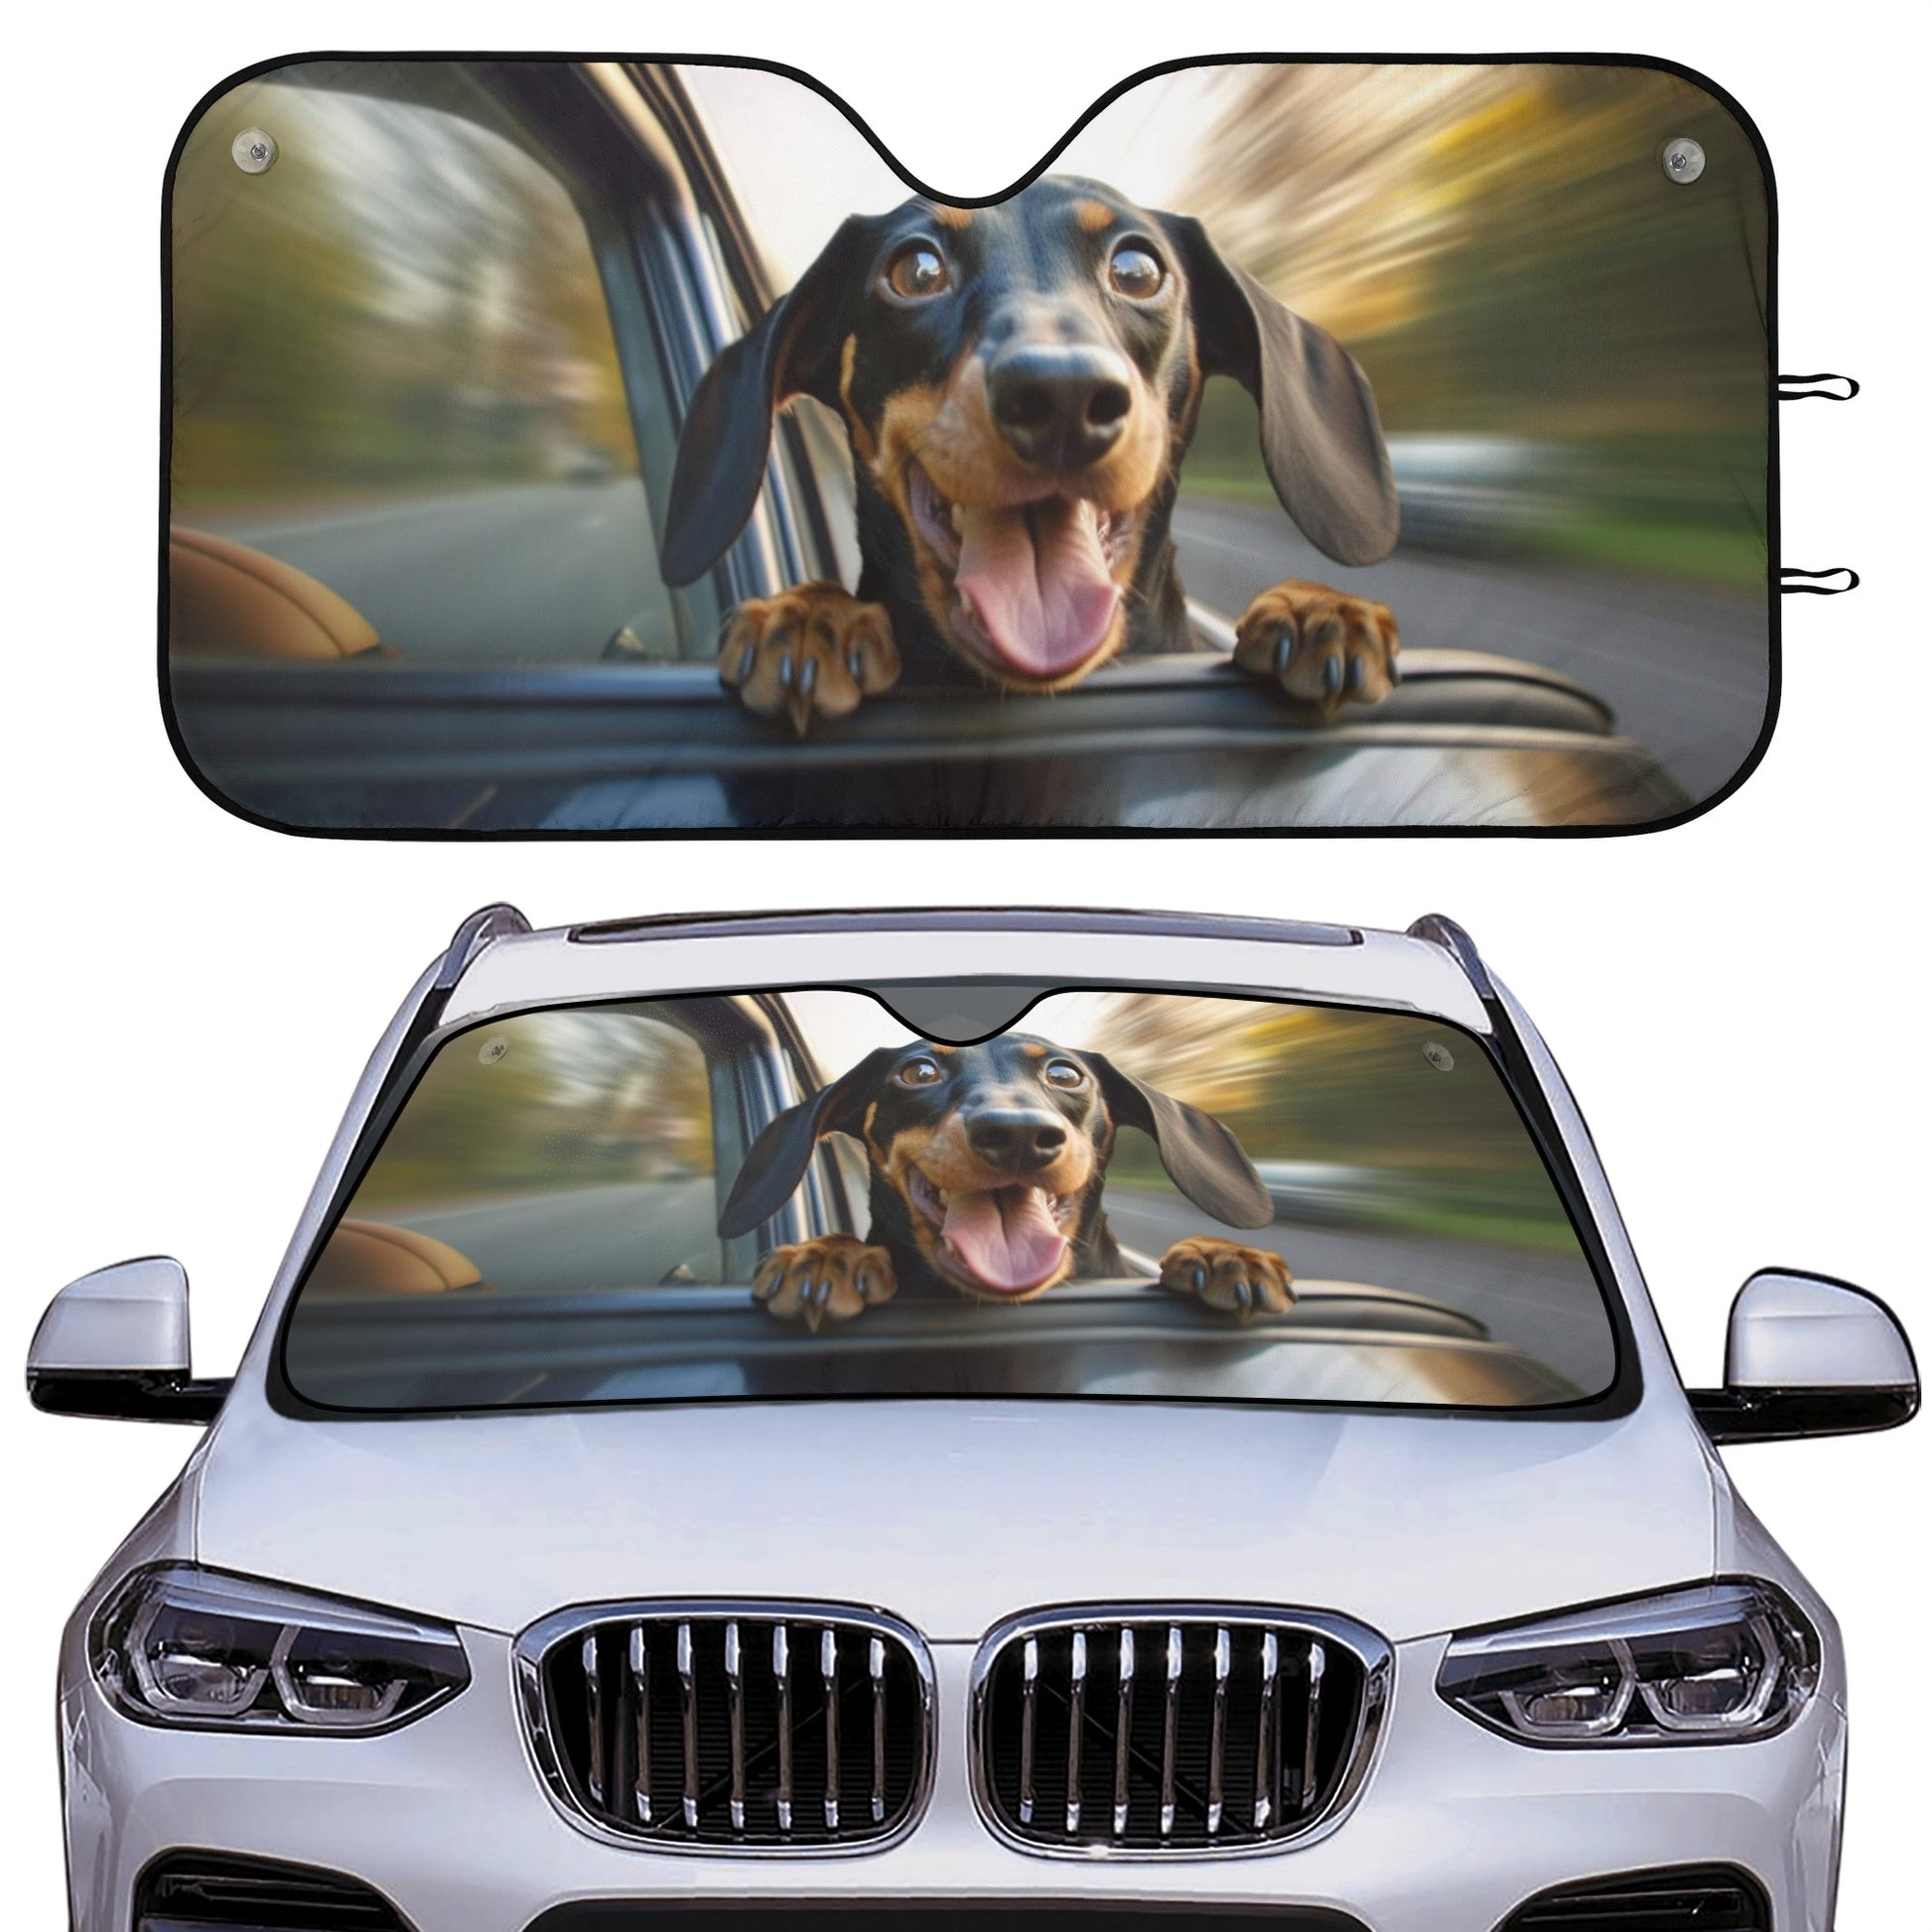 Dachshund Dog Car Sun Shade, Funny Front Windshield Coverings Blocker Auto Protector Window Visor Screen Cover Shield Men Women SUV Truck Starcove Fashion